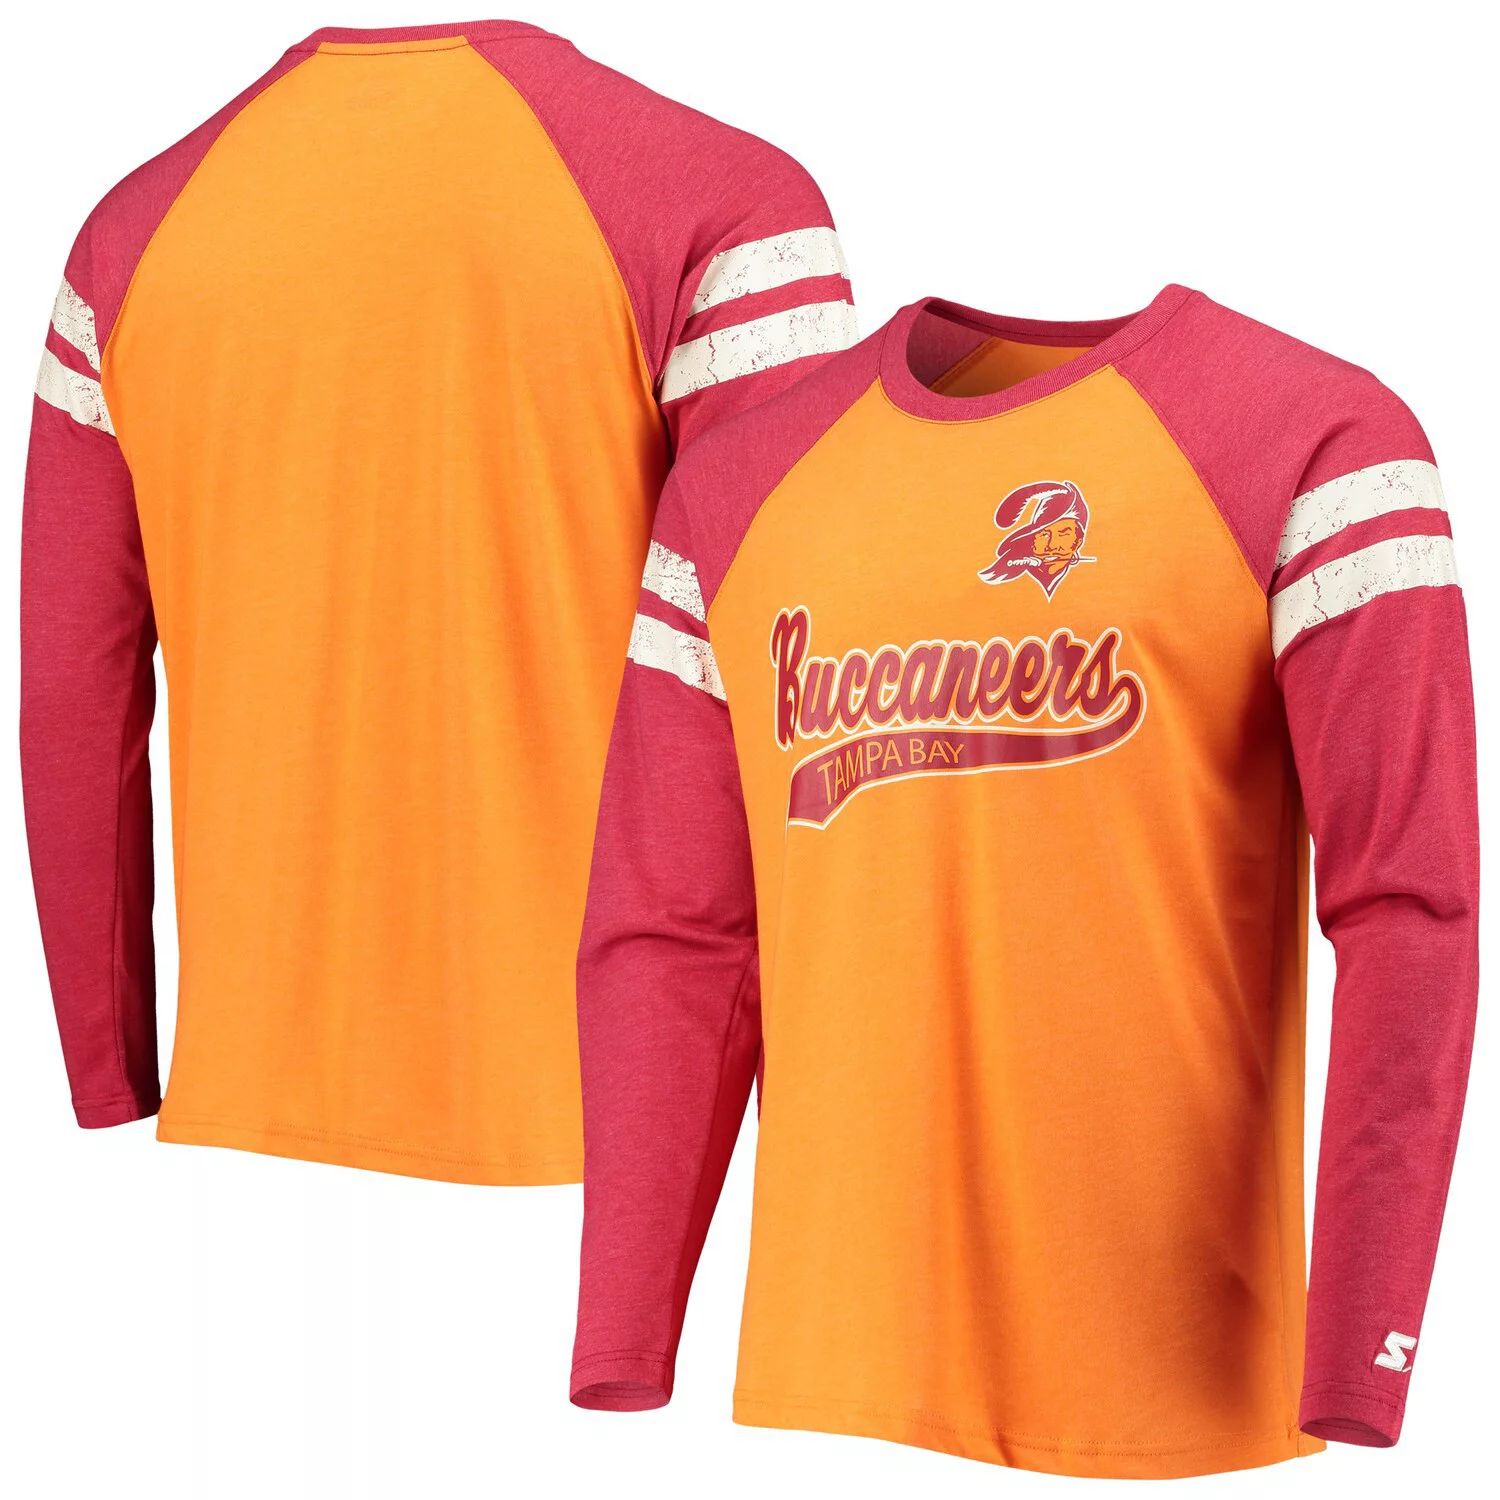 Мужская оранжево-красная футболка Tri-Blend с длинными рукавами Tampa Bay Buccaneers Throwback League реглан Starter